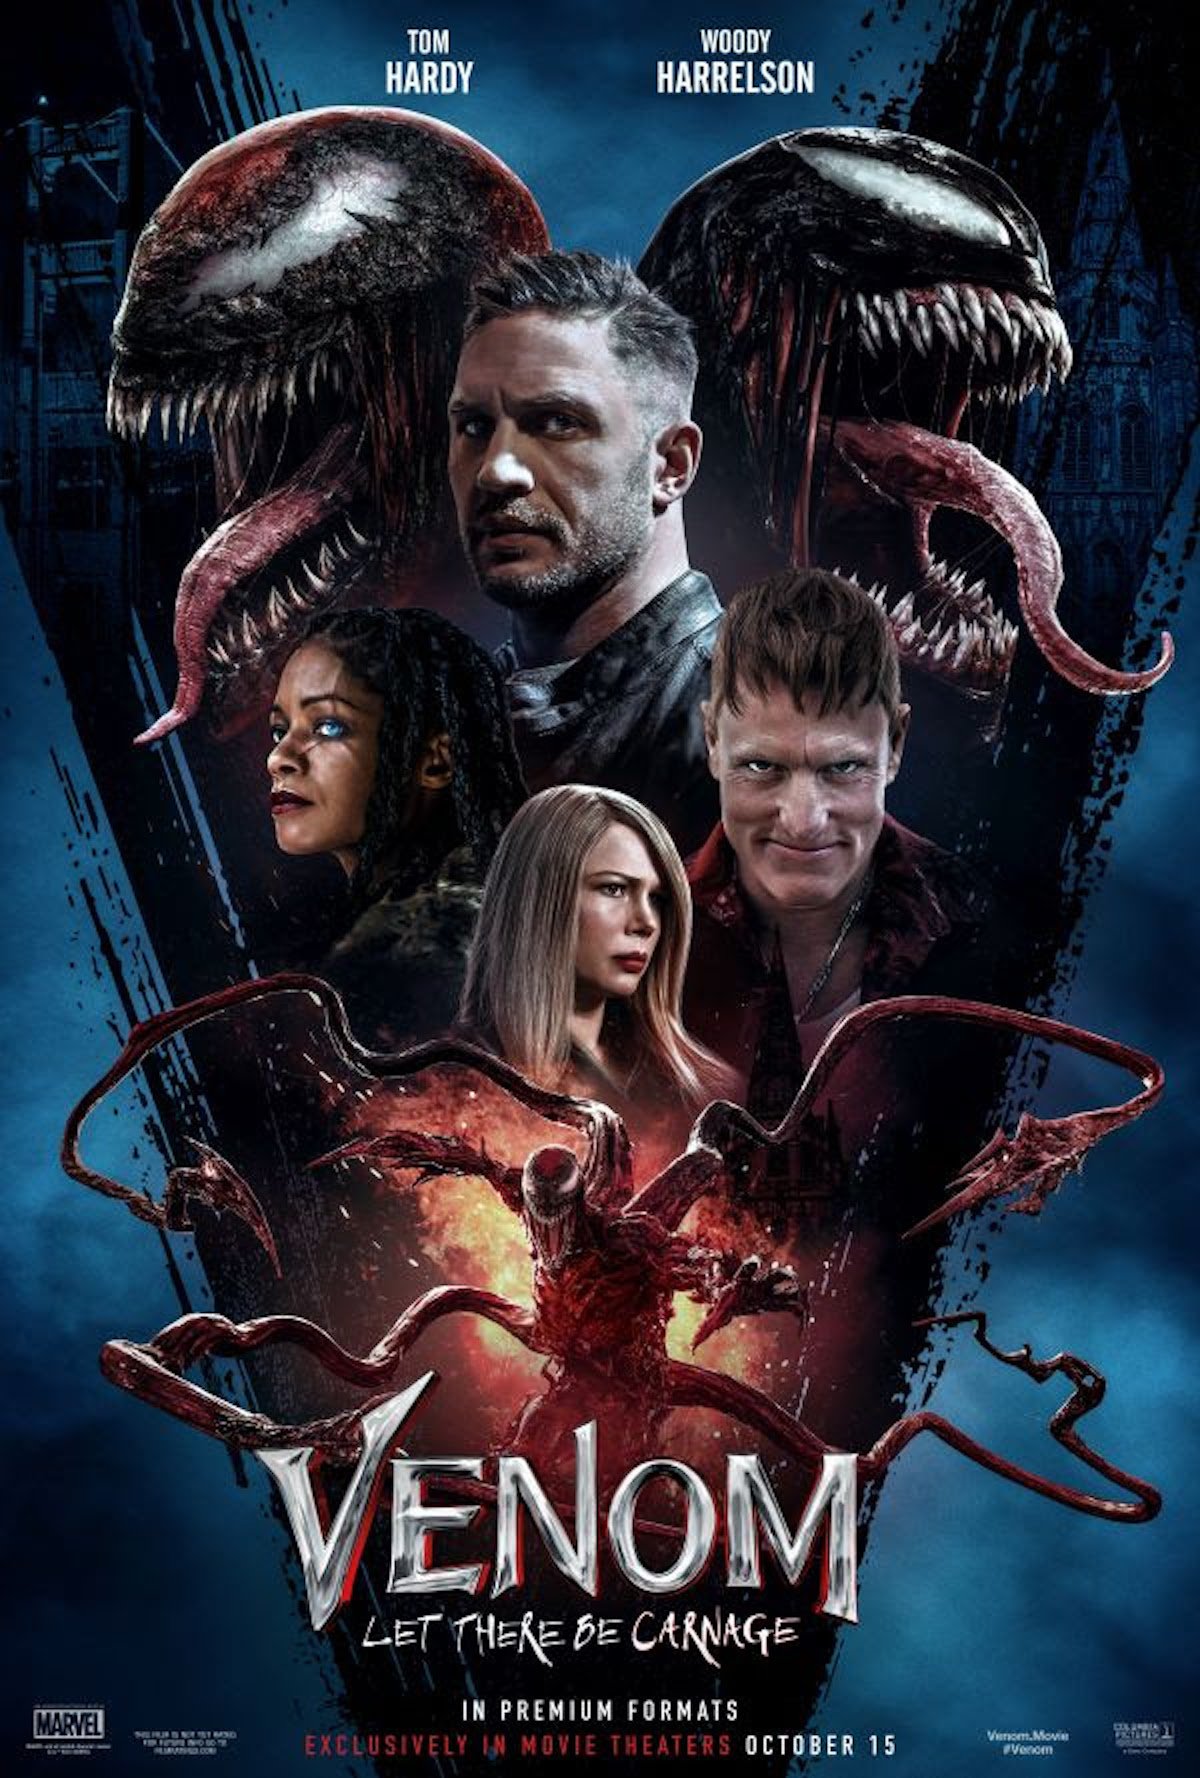 The Venom 2 poster